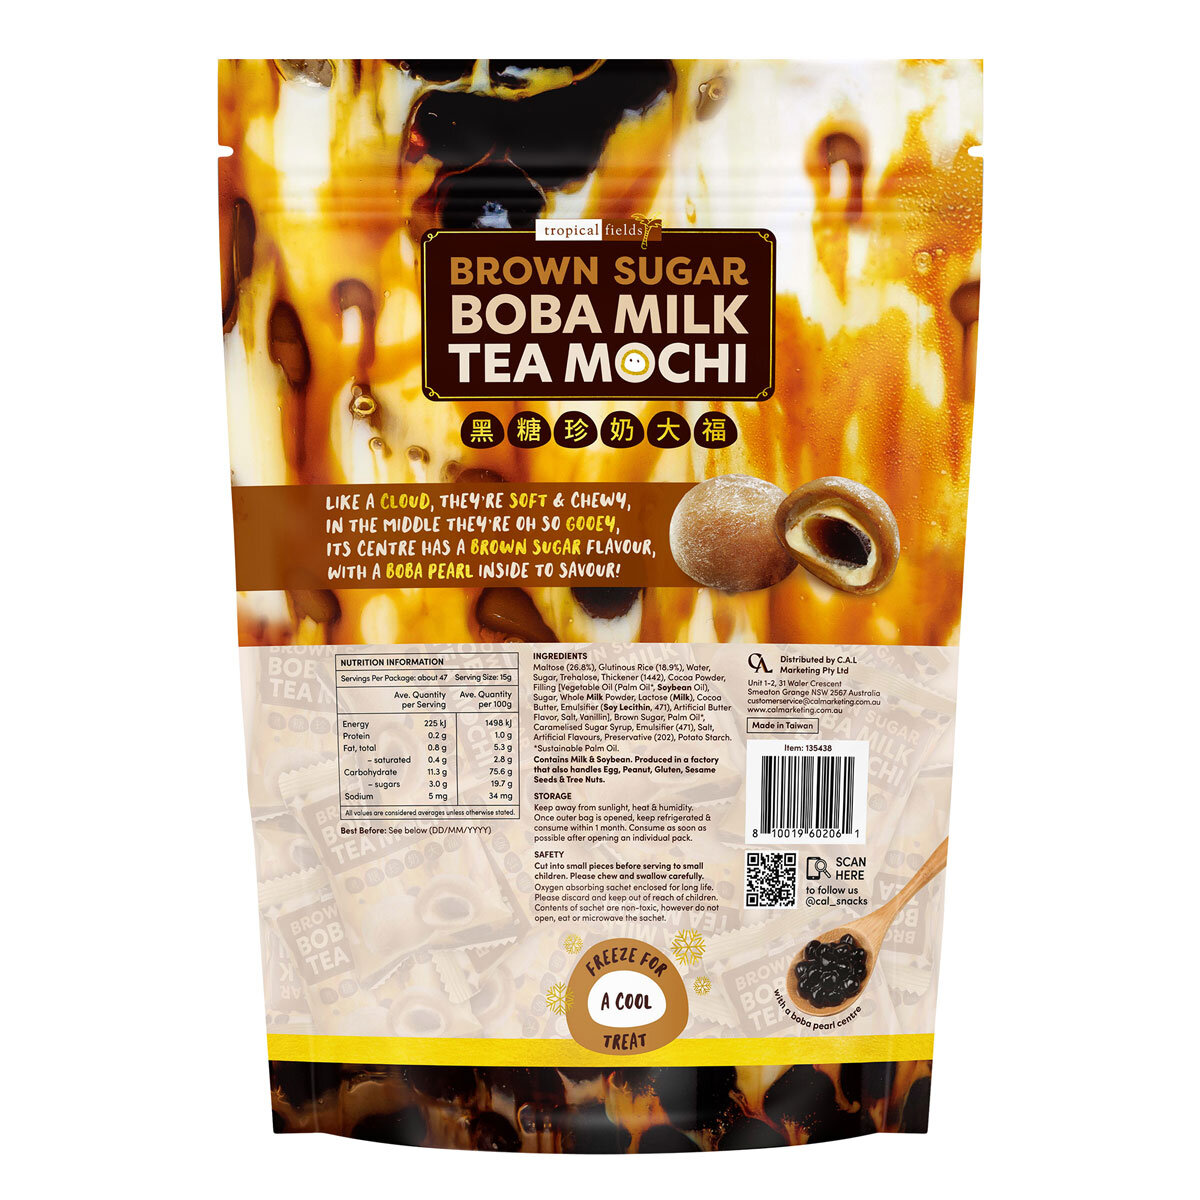 Tropical Fields Boba Milk Tea Mochi, 900g Costco UK